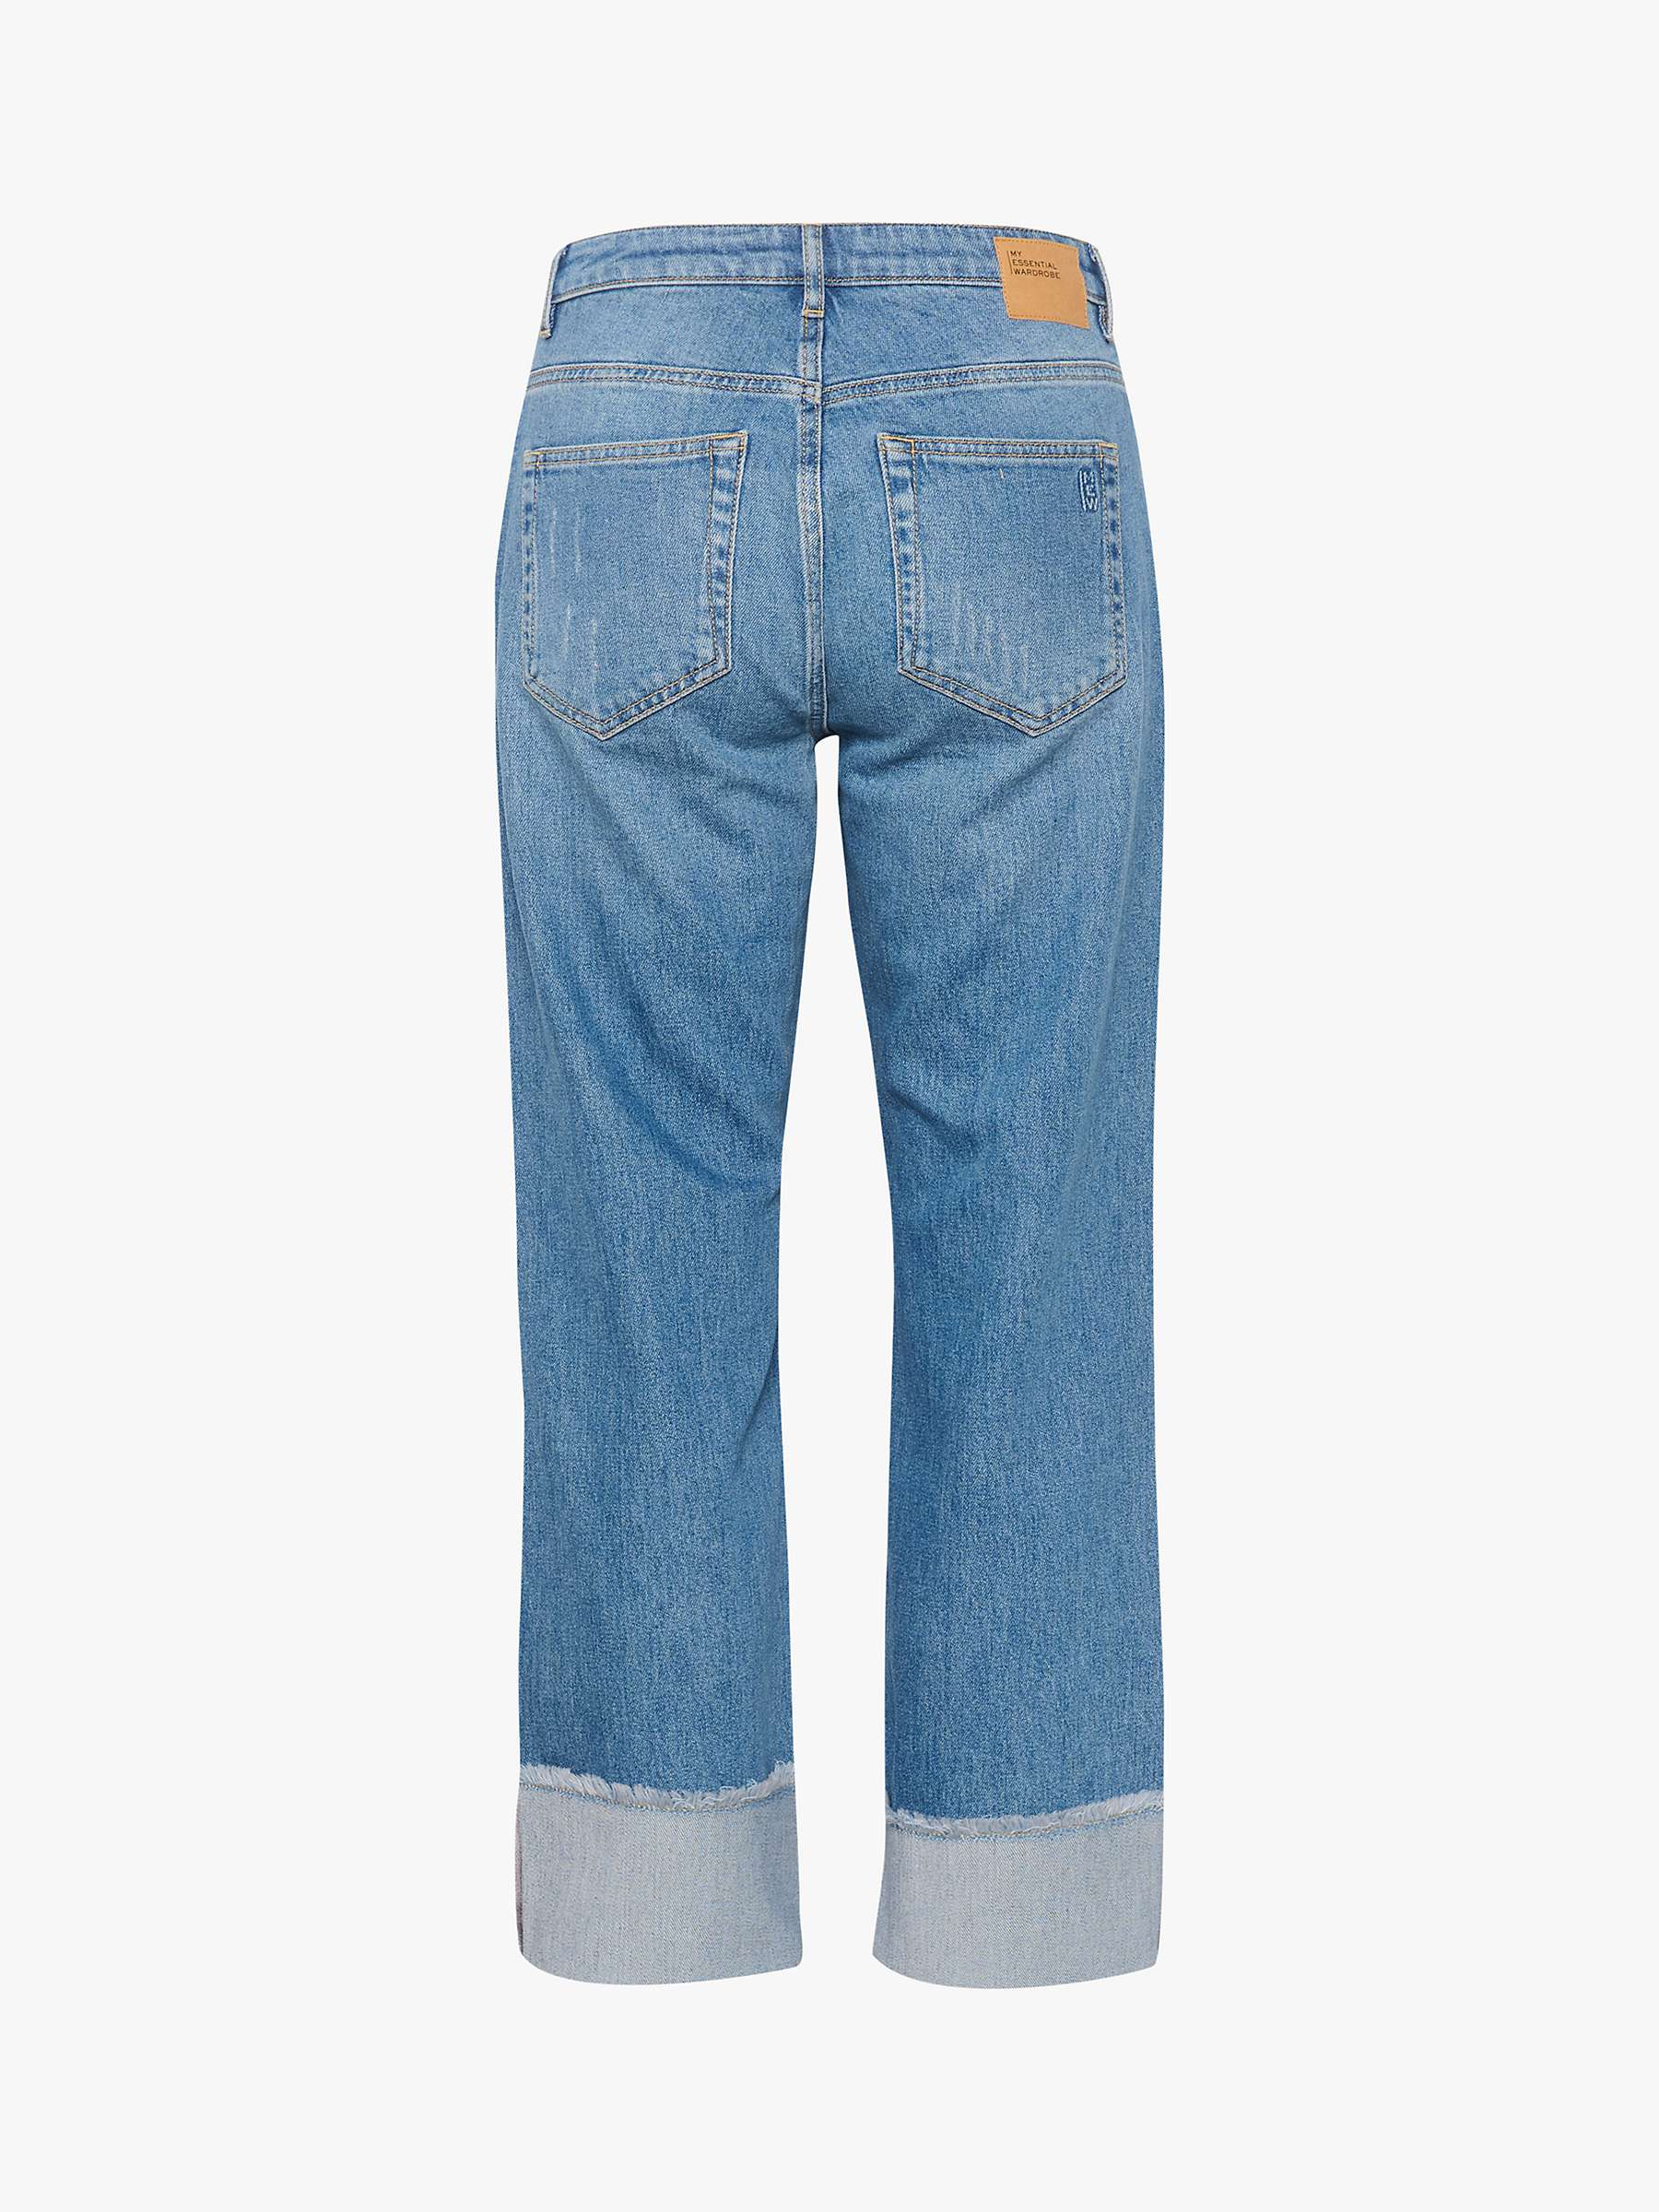 Buy MY ESSENTIAL WARDROBE Dallas 139 Straight Leg Jeans, Medium Blue Wash Online at johnlewis.com